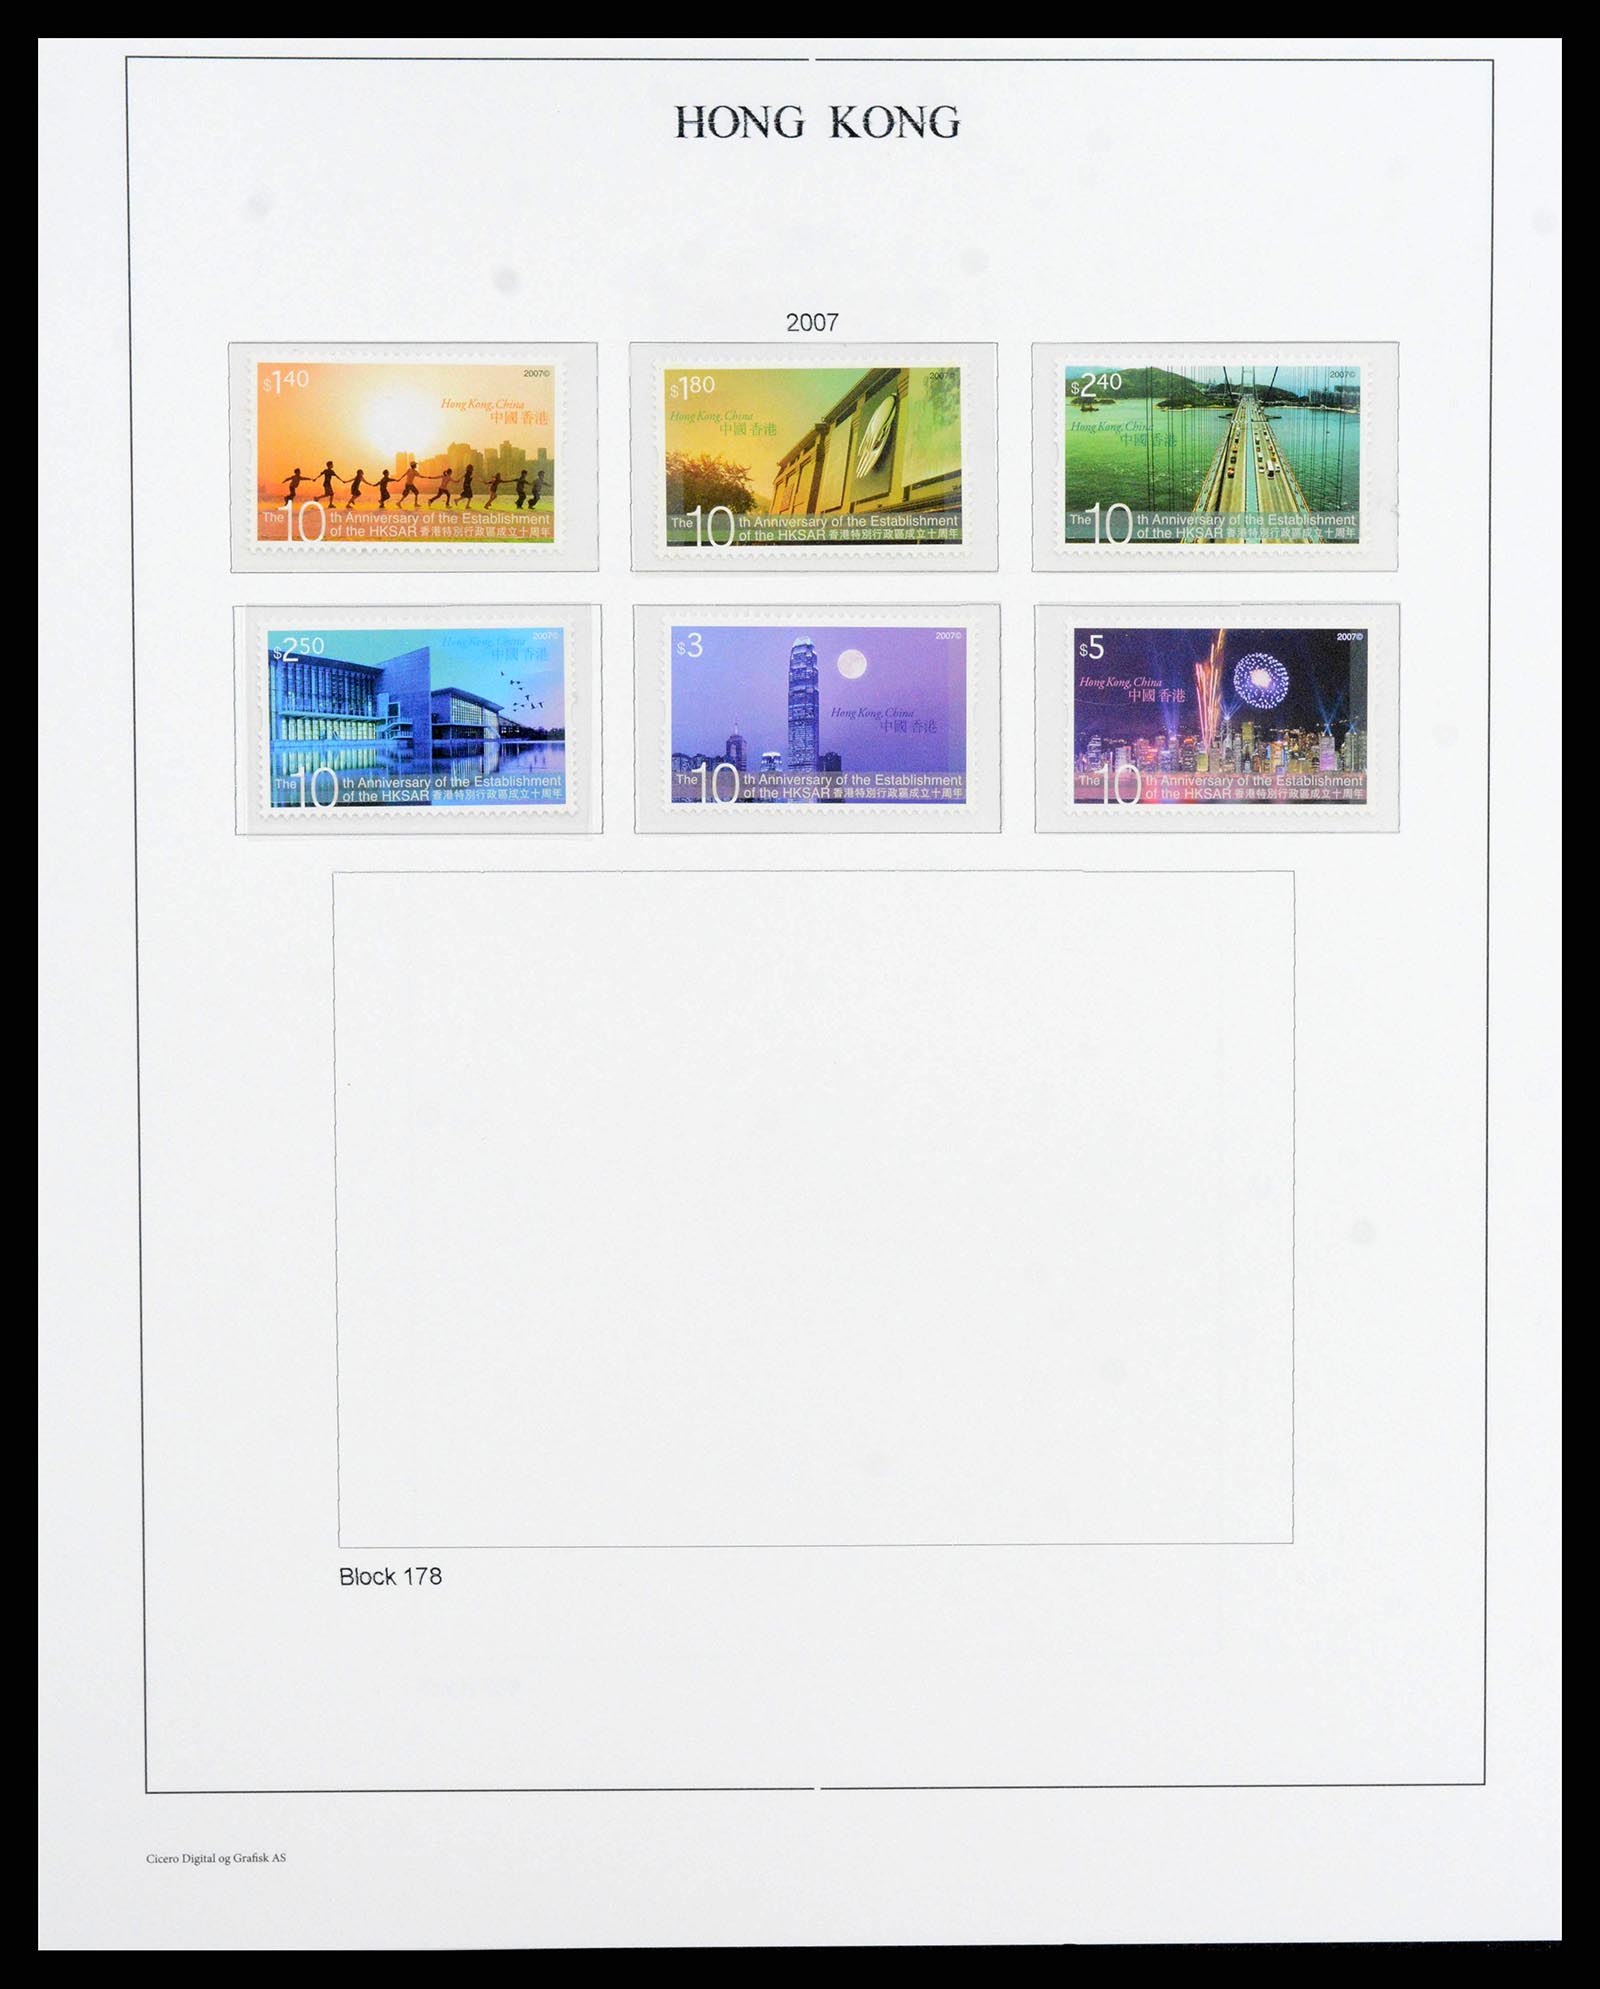 37955 0271 - Stamp collection 37955 Hong Kong supercollection 1862-2007.